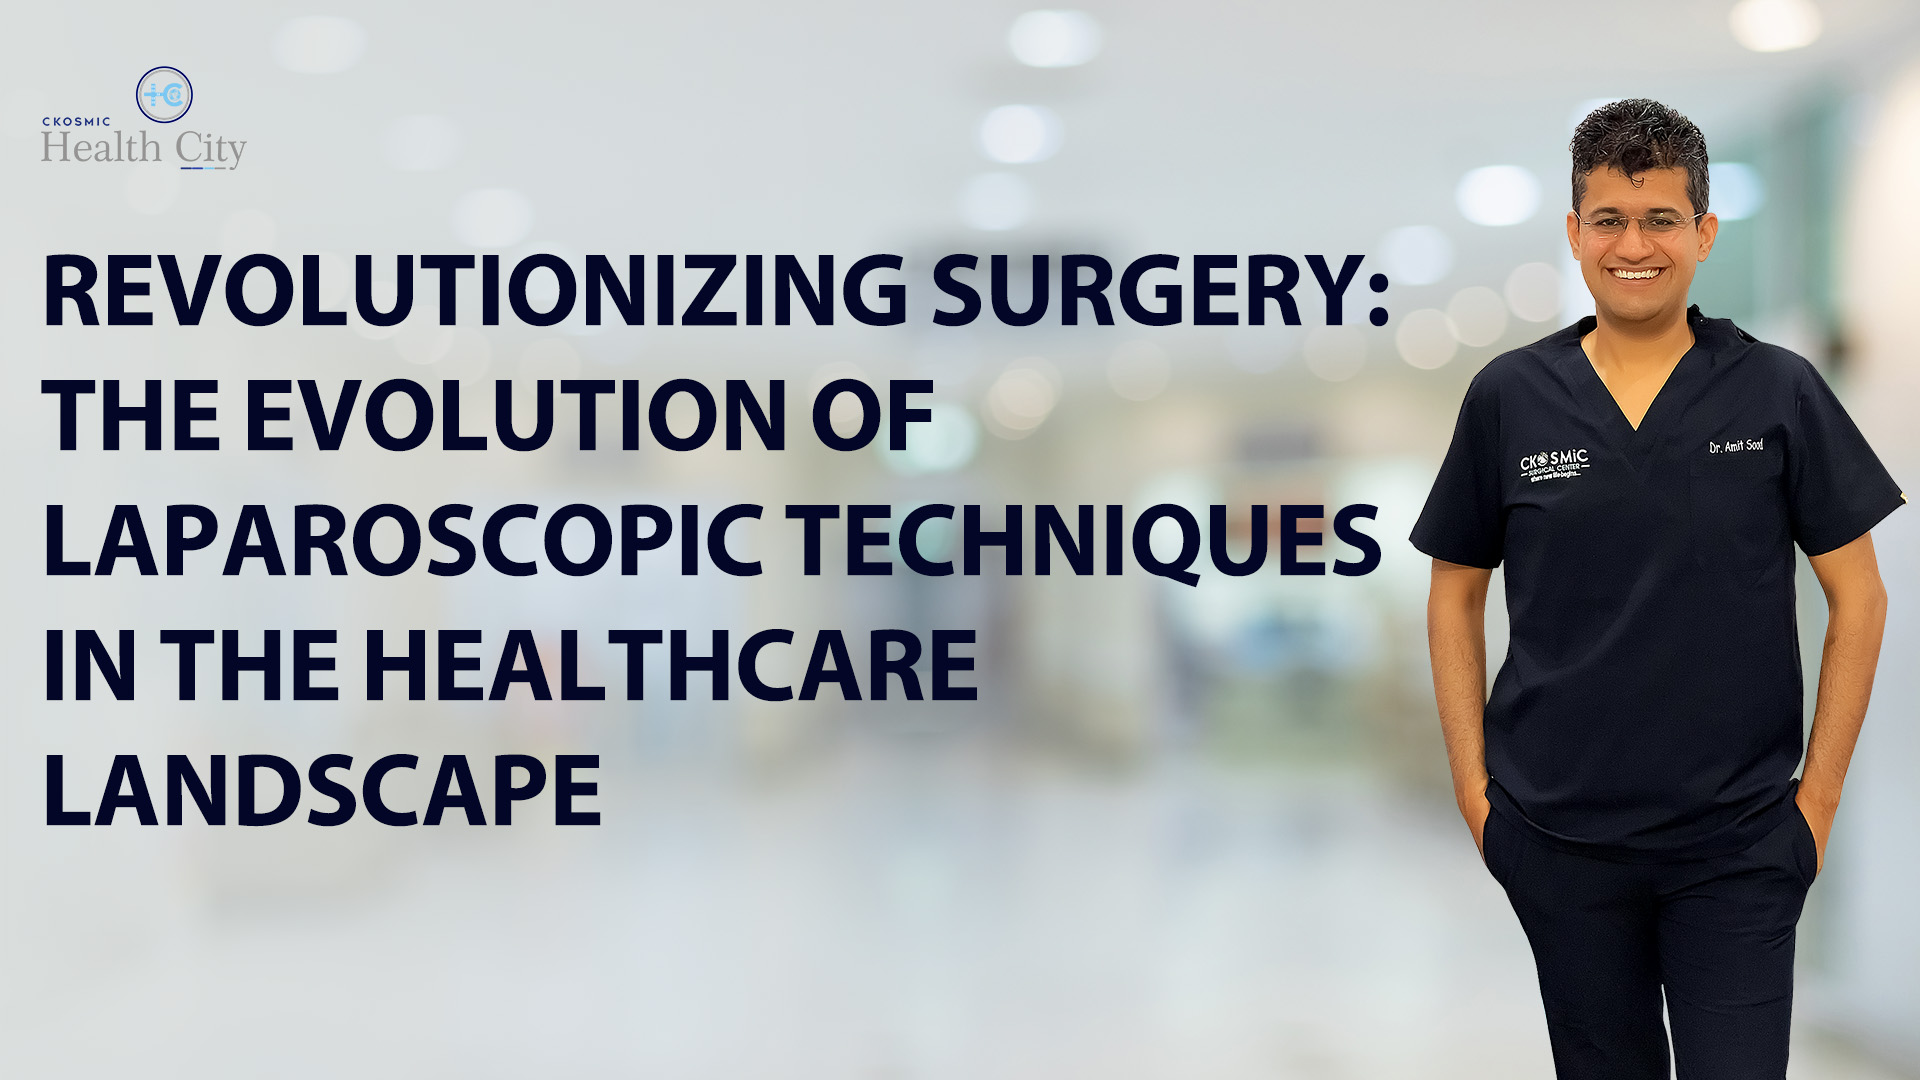 Revolutionizing Surgery: The Evolution of Laparoscopic Techniques in the Healthcare Landscape